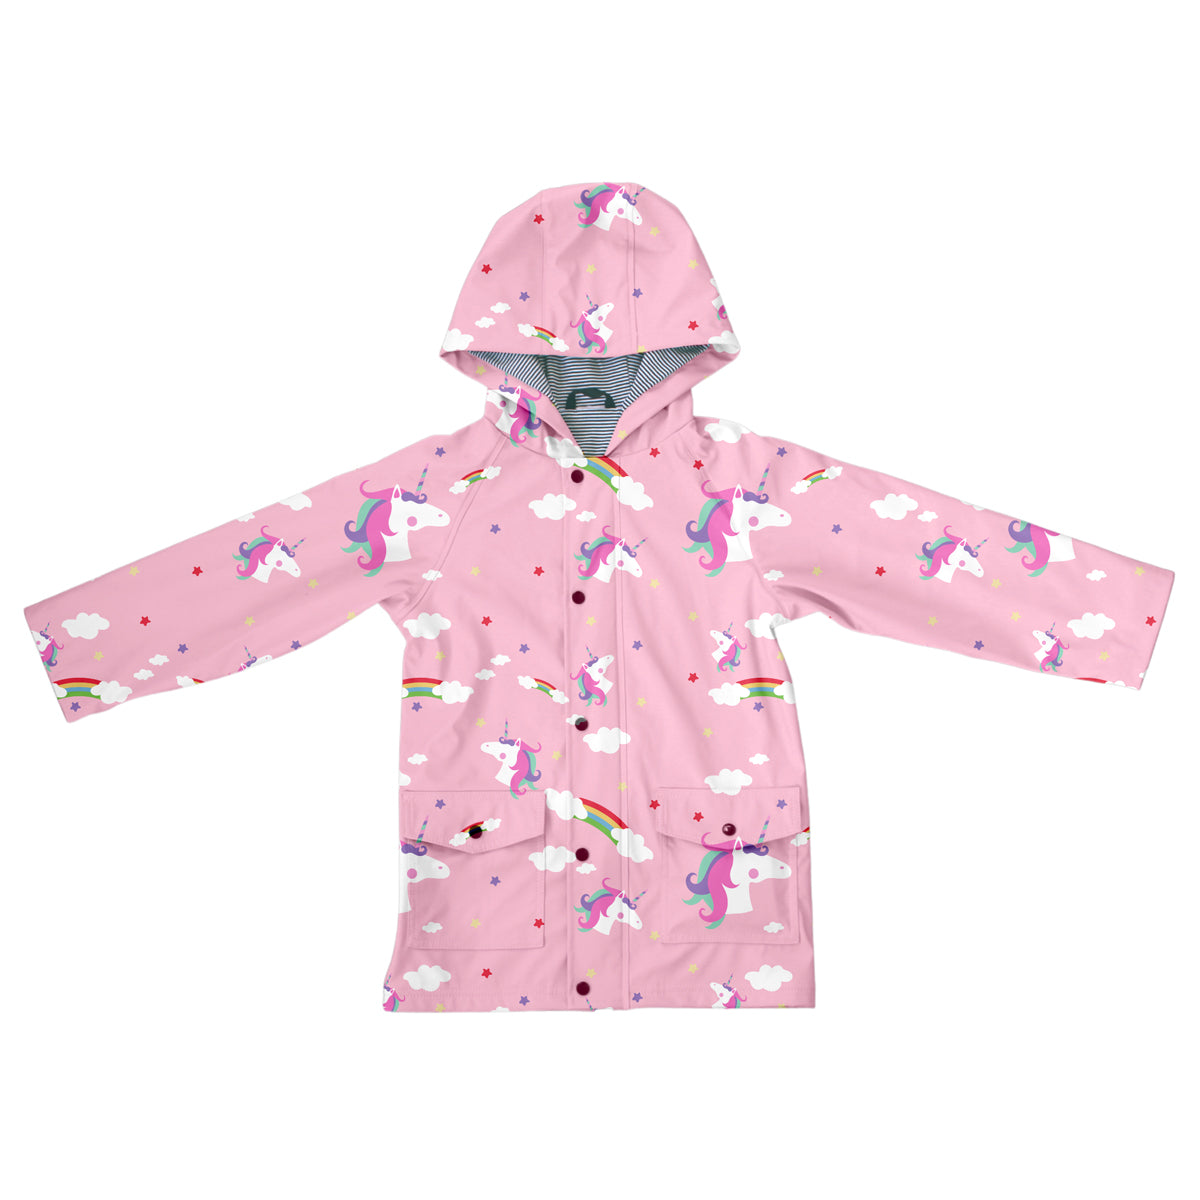 UNICORNs Pink Collection Raincoat